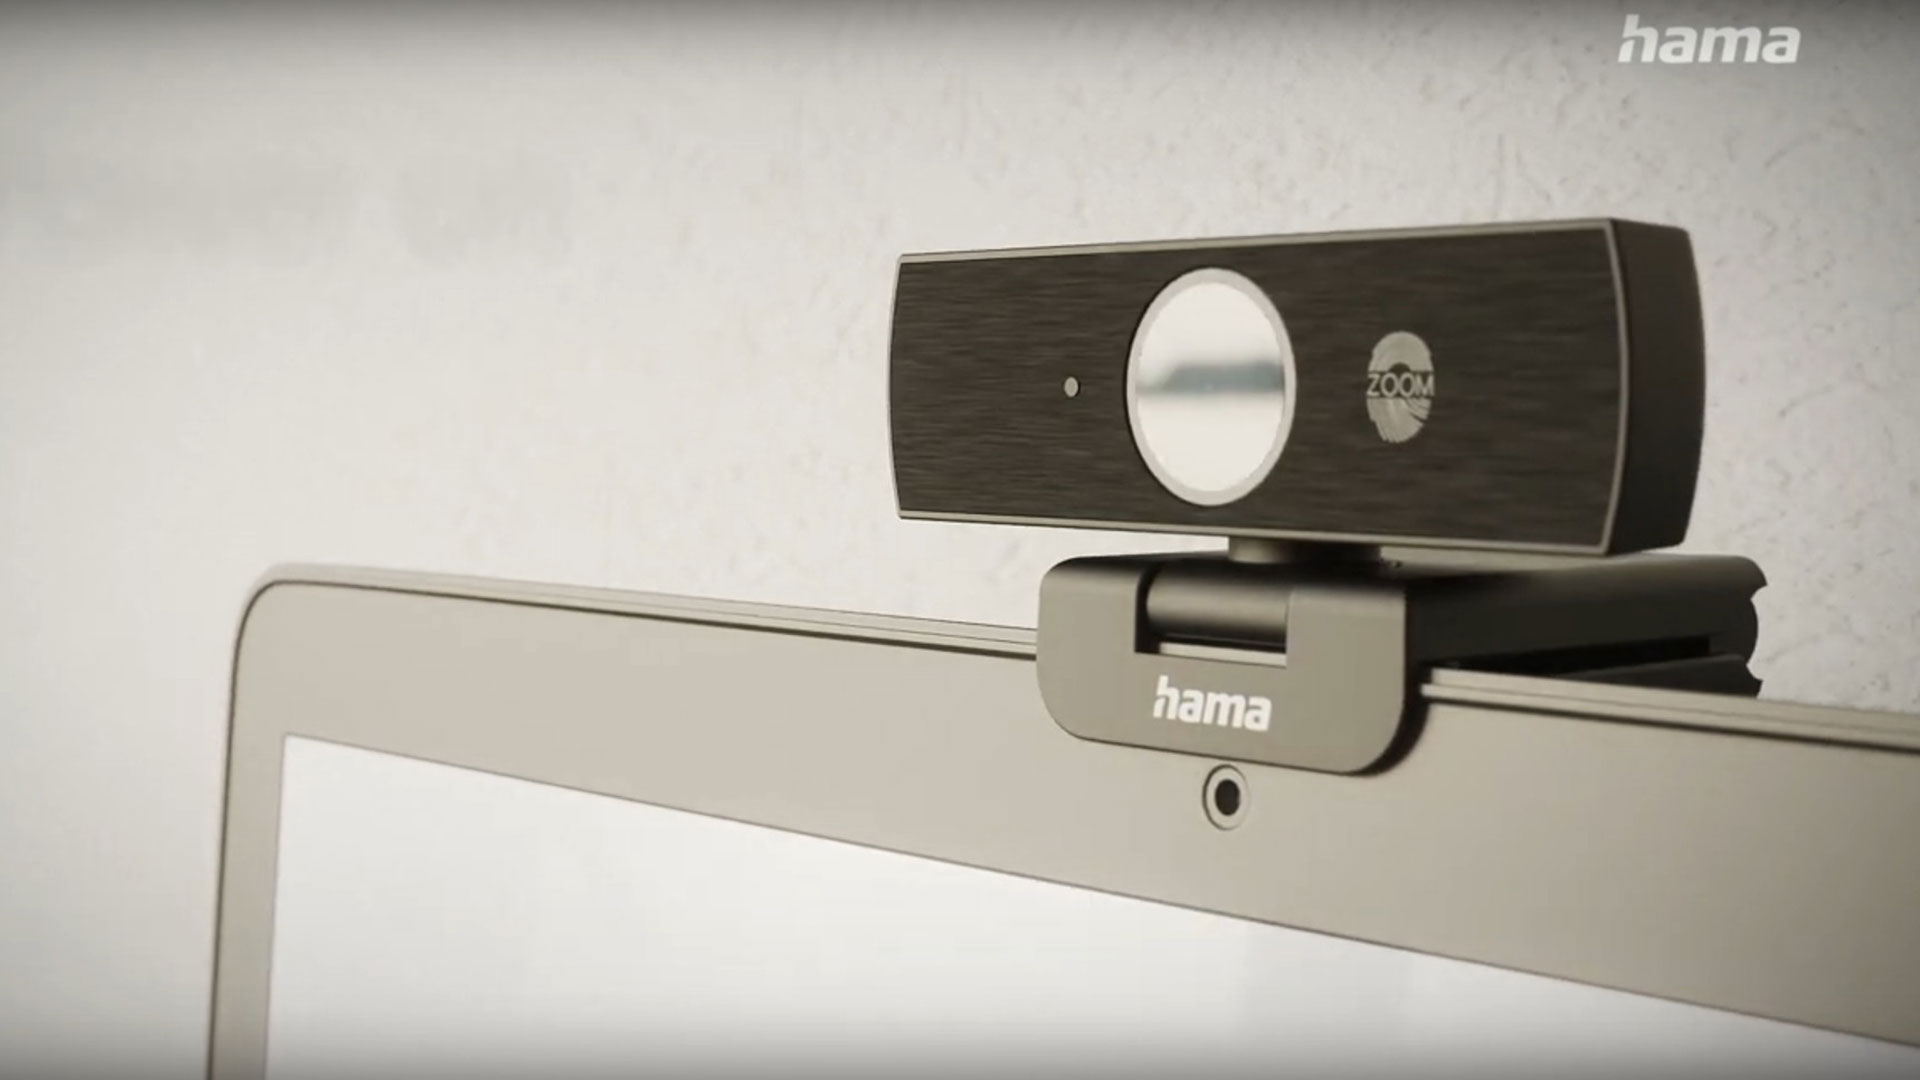 Hama "C-900 Pro" PC-Webcam